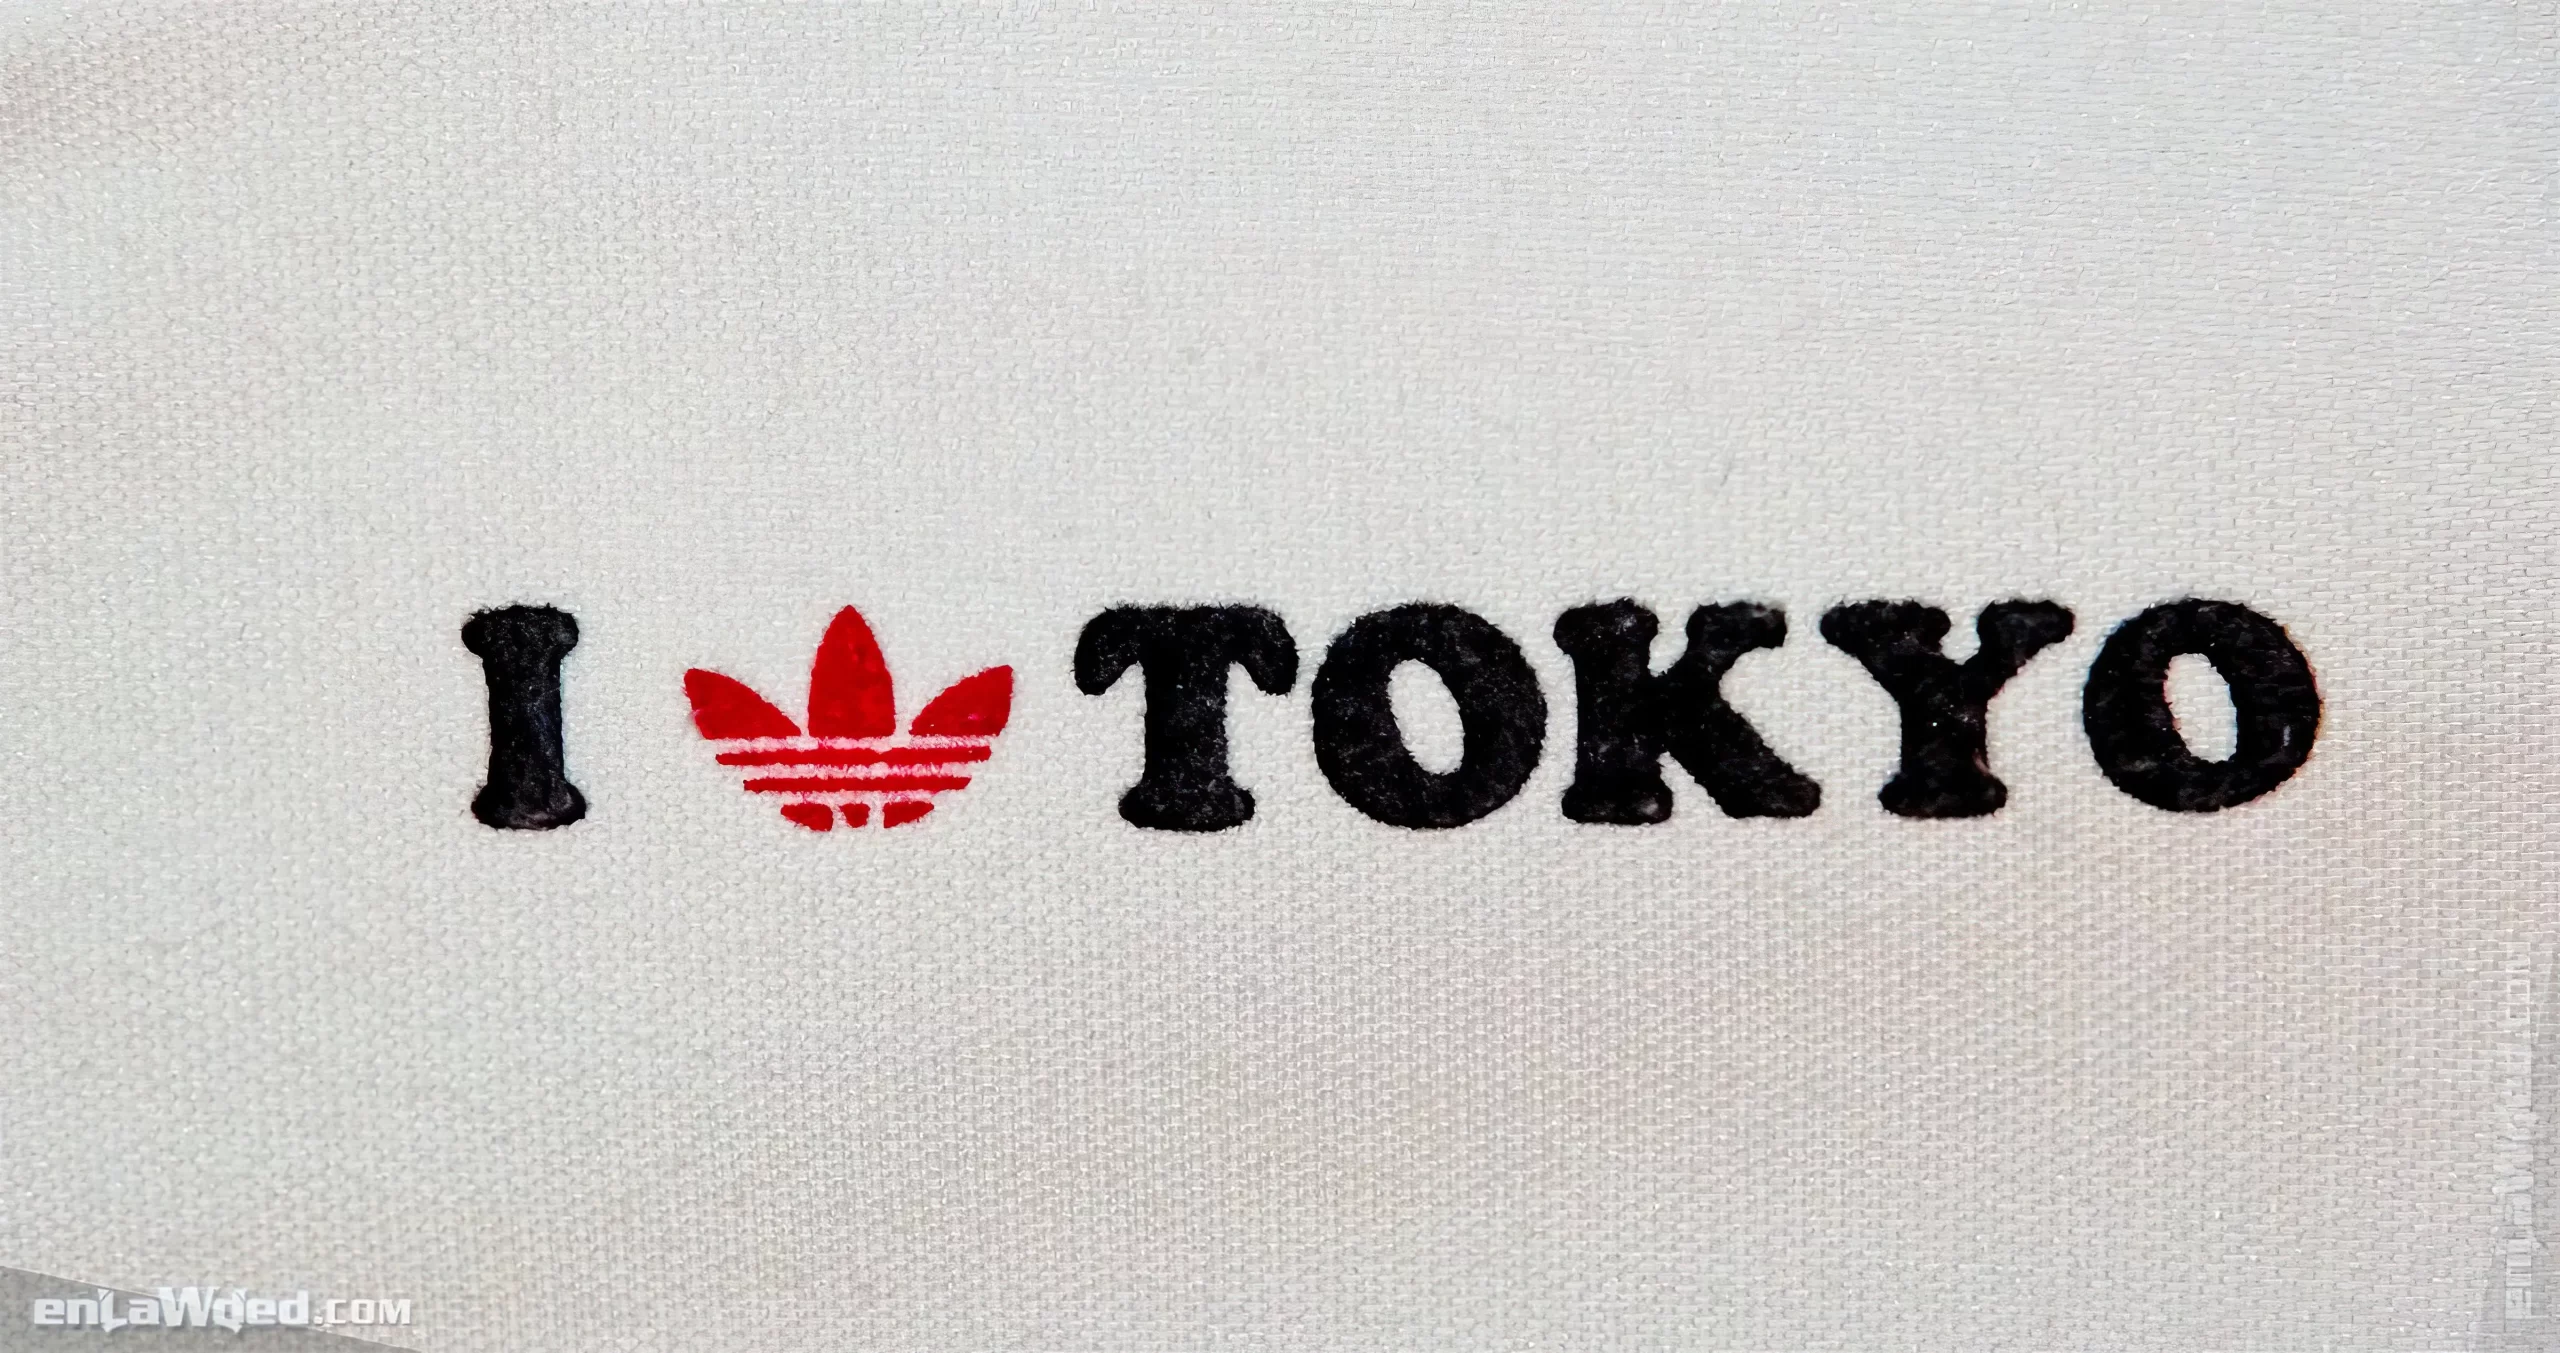 Men’s 2006 Tokyo TT-Two by Adidas Originals: Dazzling (EnLawded.com file #lmchk90109ip2y121920kg9st)